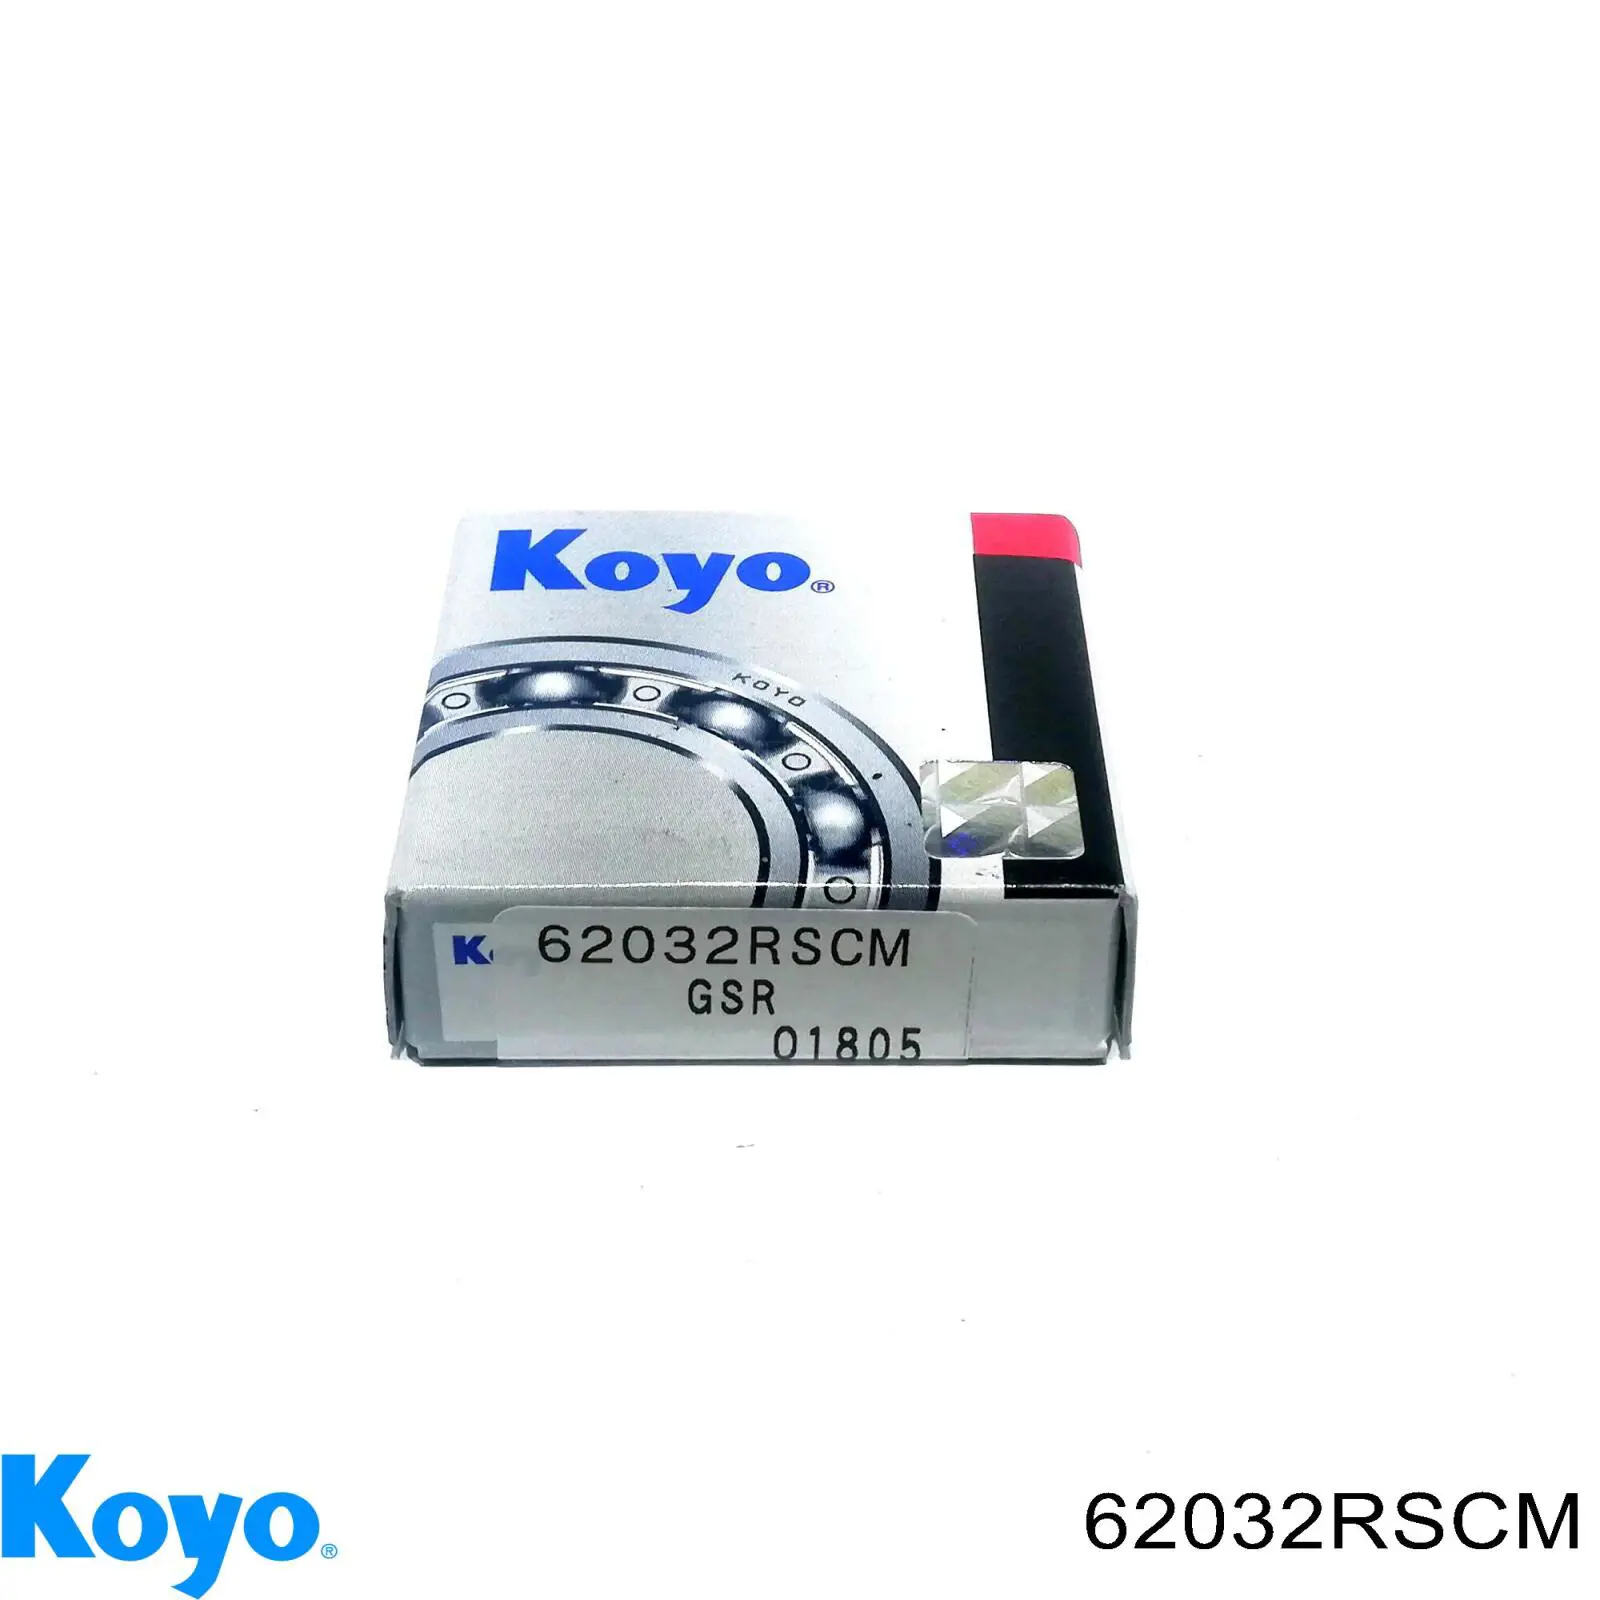 62032RSCM Koyo опорный подшипник первичного вала кпп (центрирующий подшипник маховика)